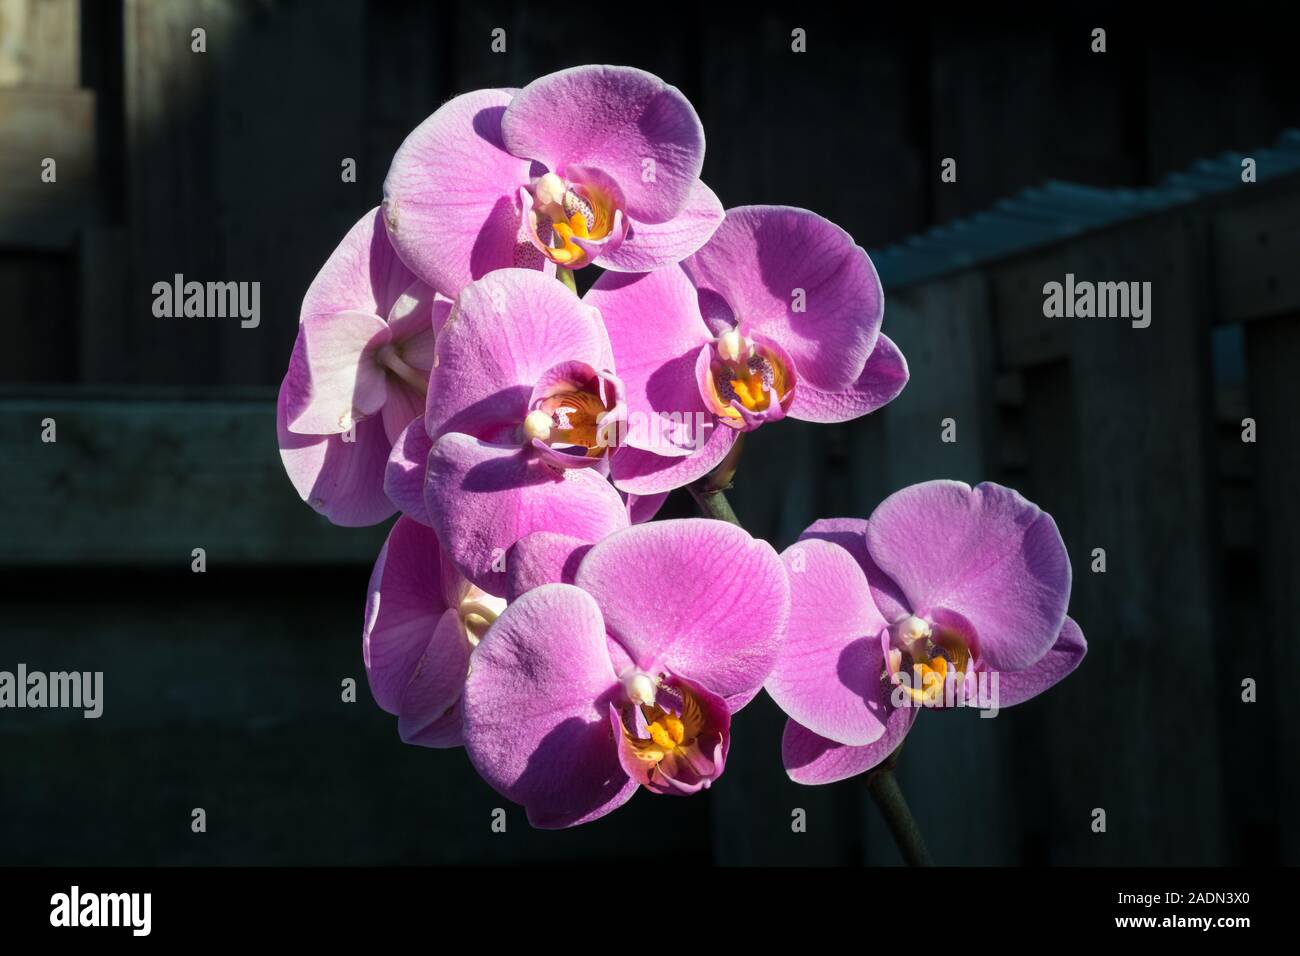 Beautiful lila to purple orchid - phalaenopsis flowers on a dark background Stock Photo